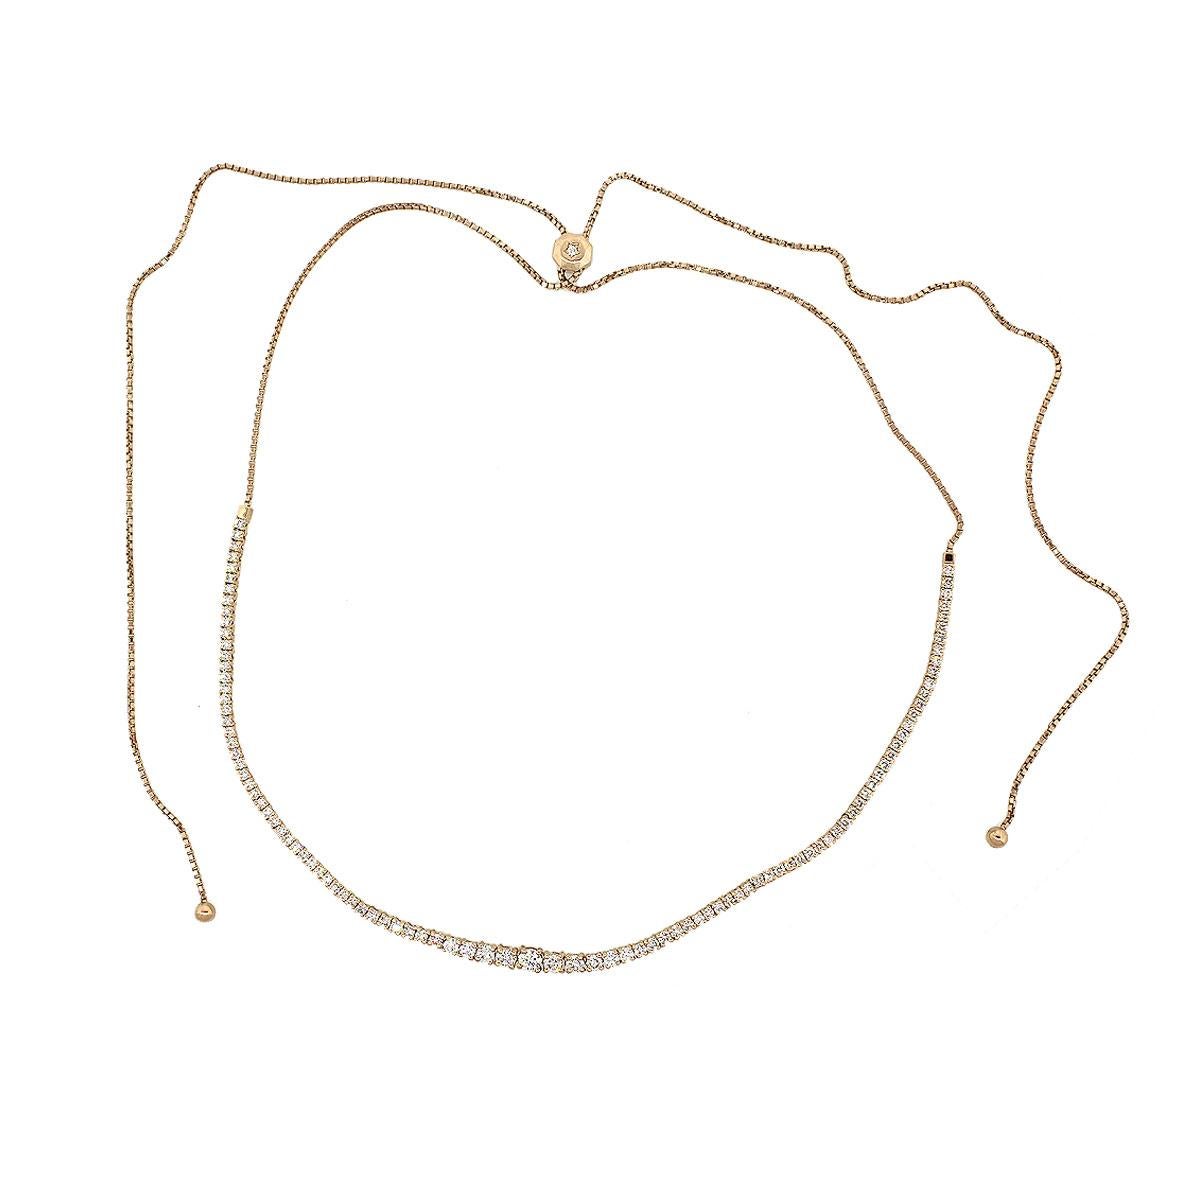 Round Cut Round Diamond Graduating Tennis Lariat-Style Necklace